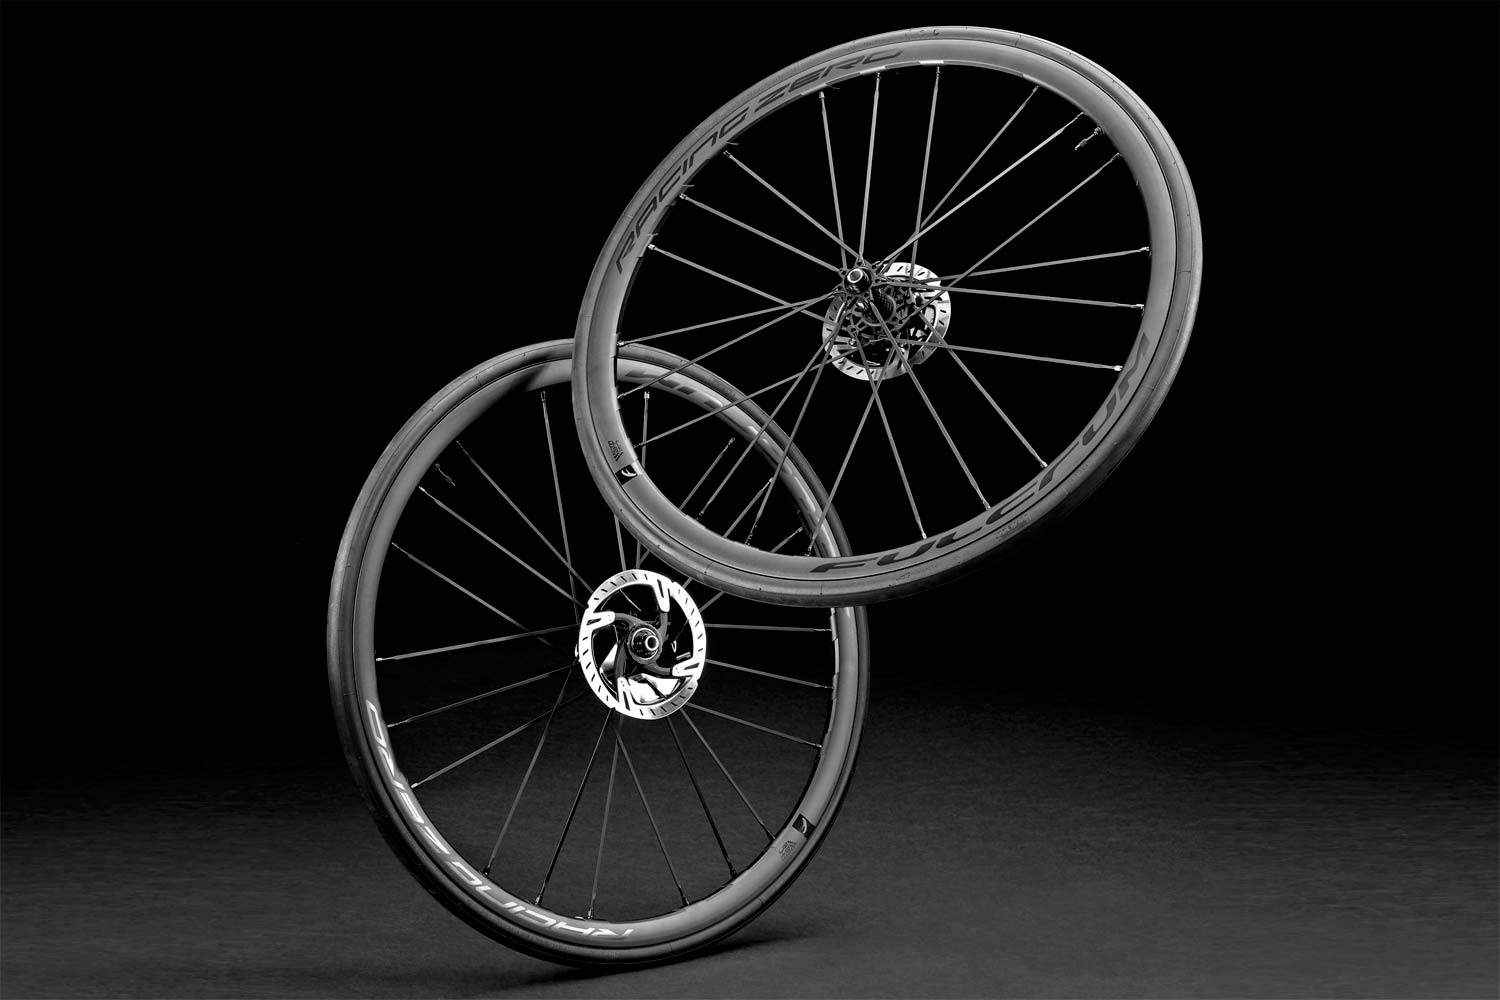 Fulcrum Racing Zero Cmptzn DB alloy road wheels, machined aluminum 19mm internal black label CULT ceramic bearing all road bike wheelset